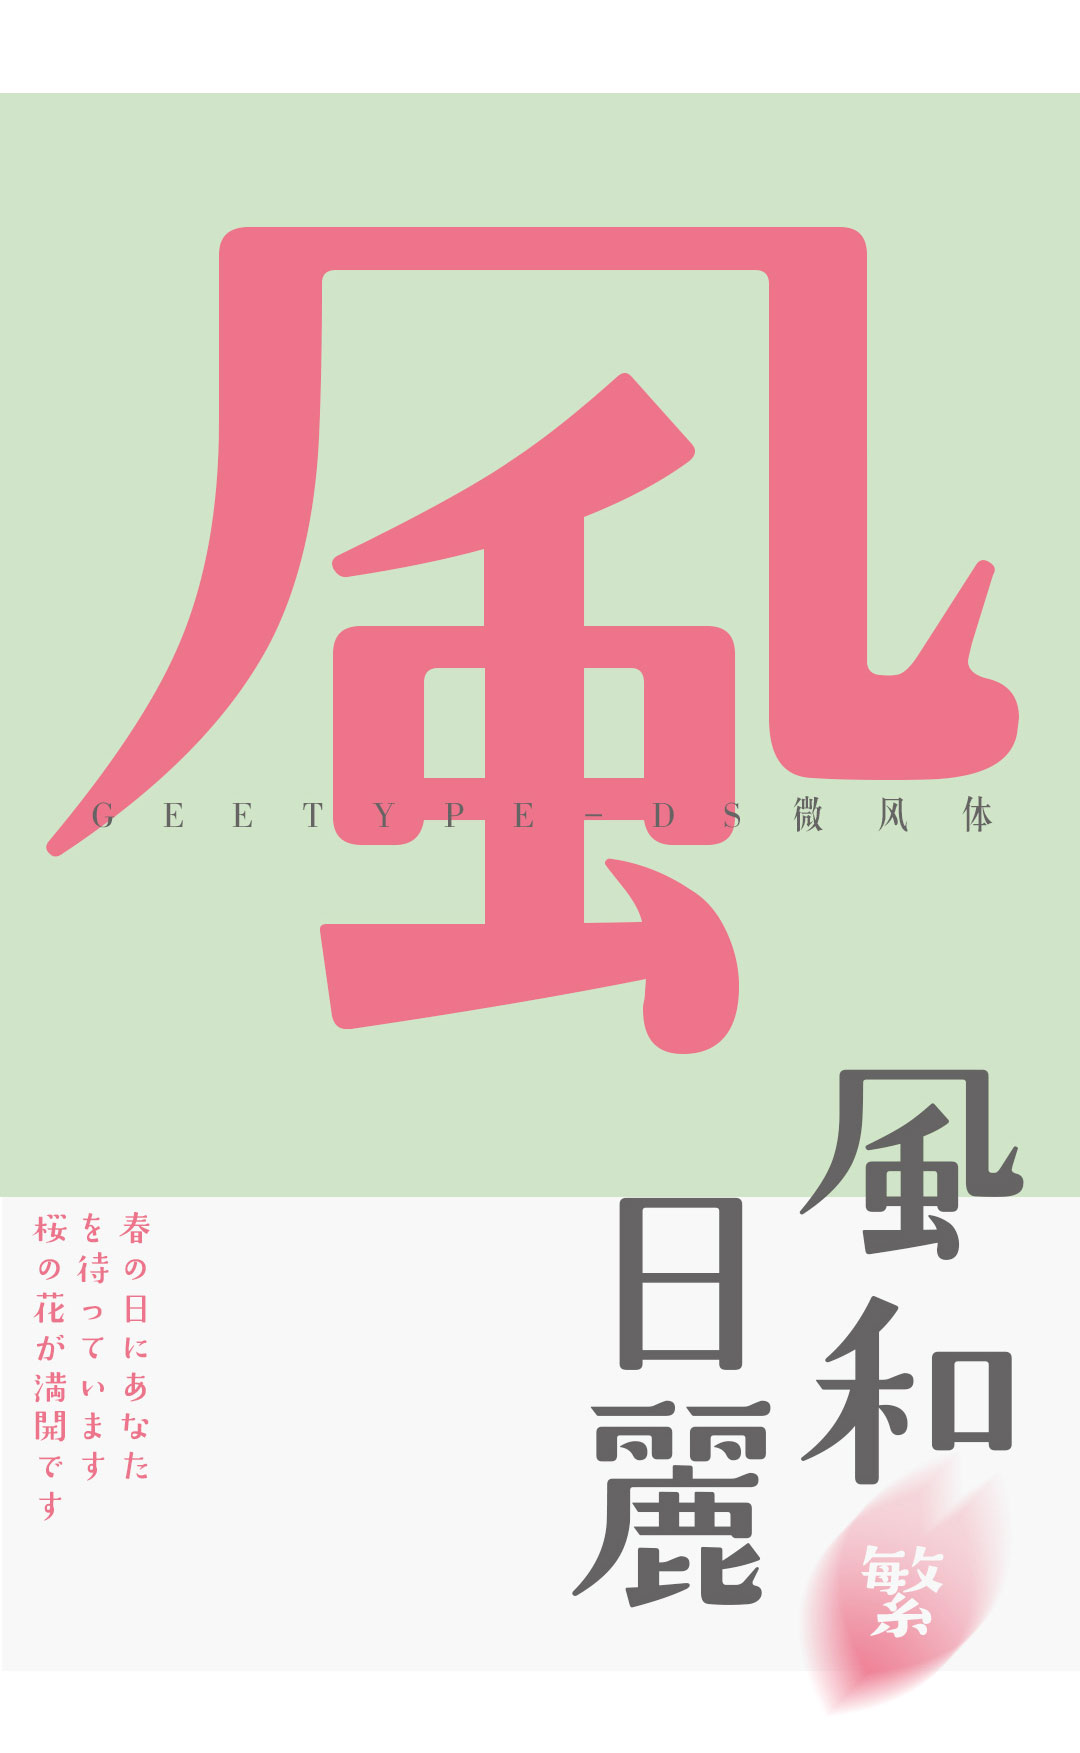 GEETYPE-DS微风体,日语字体,LOGO字体